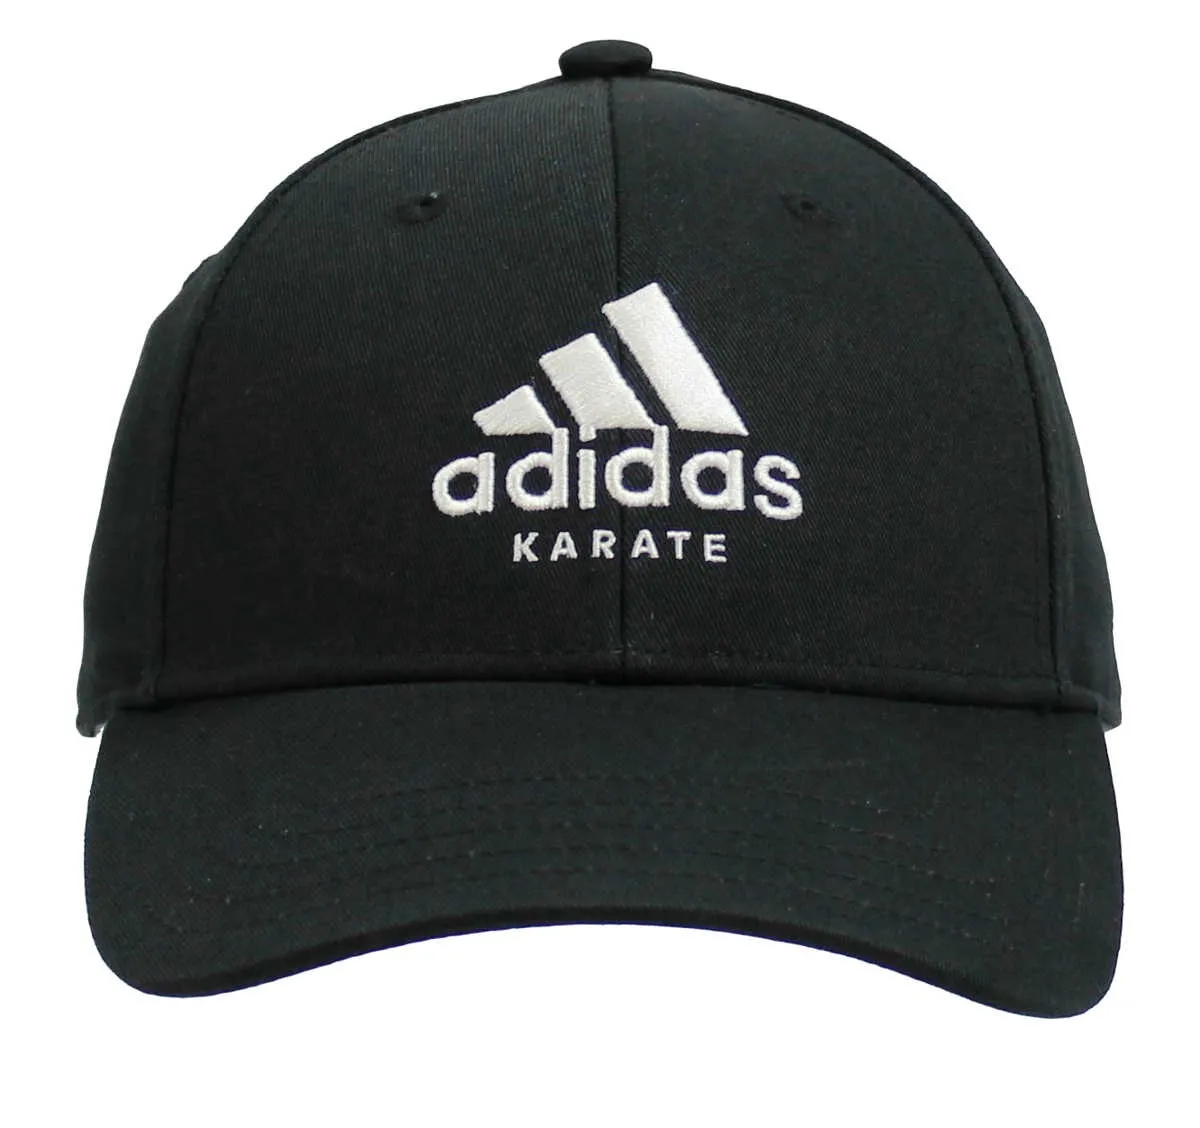 adidas baseball cap karate black